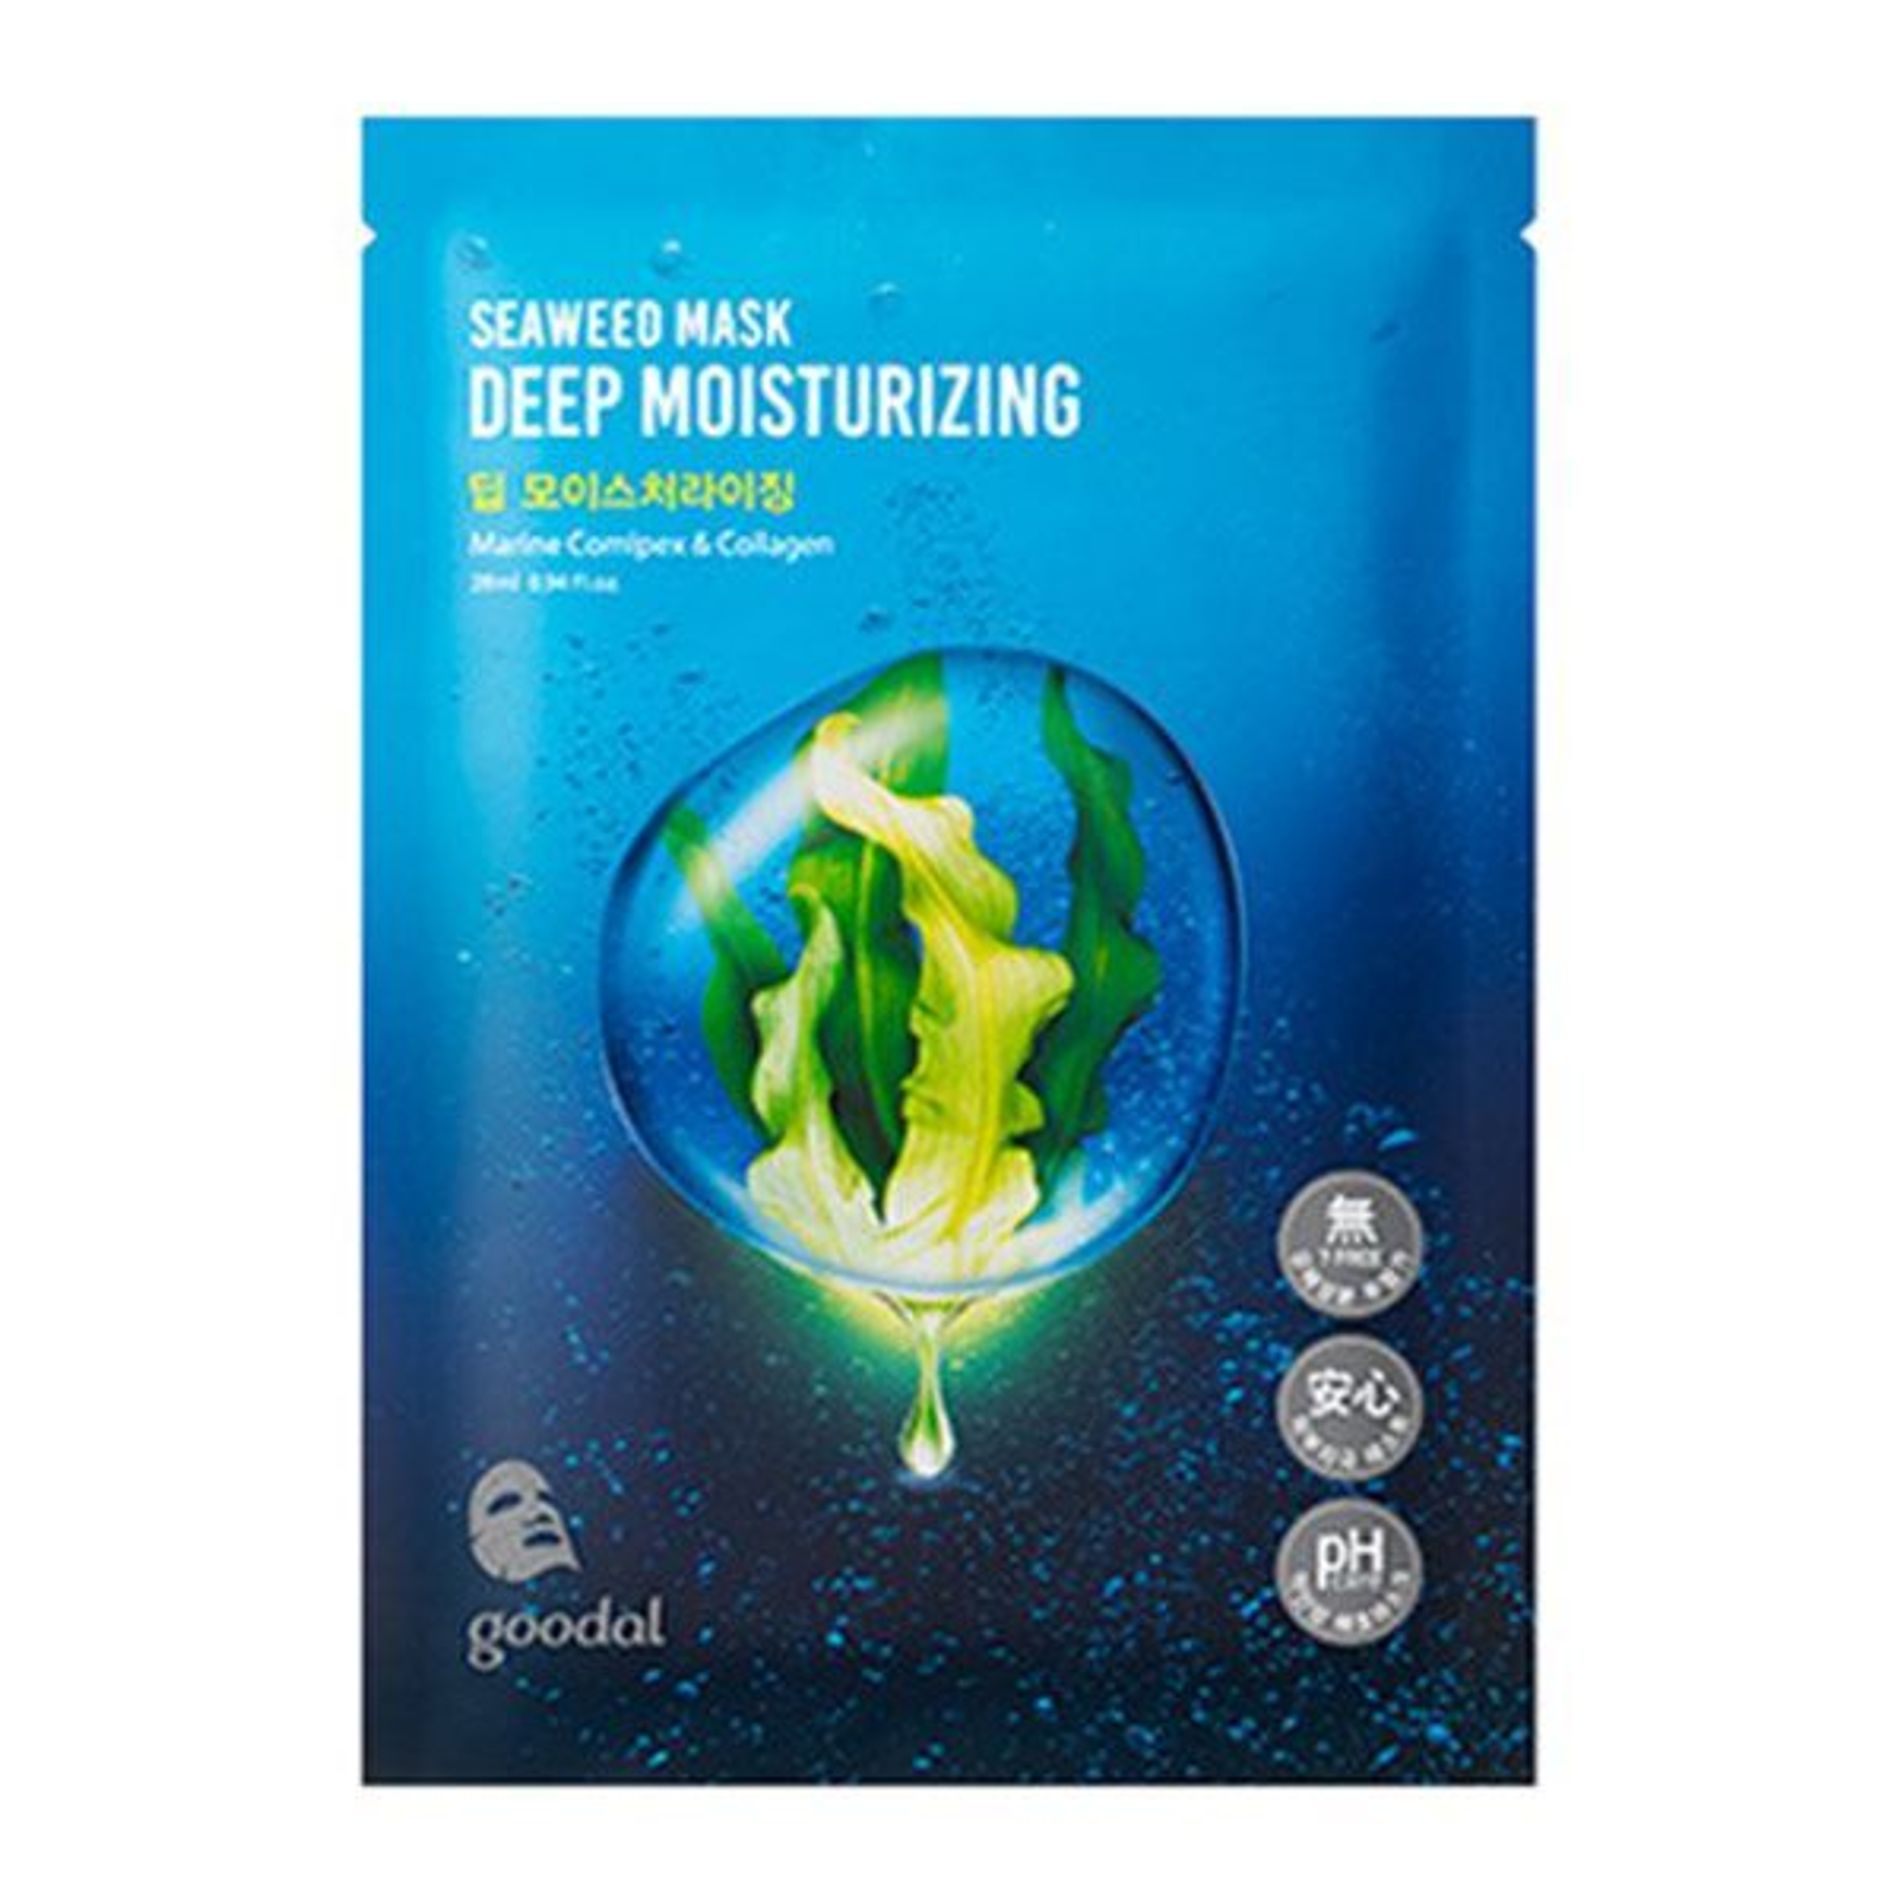 mat-na-goodal-seaweed-deep-moisturizing-mask-marine-comp-lex-collagen-2